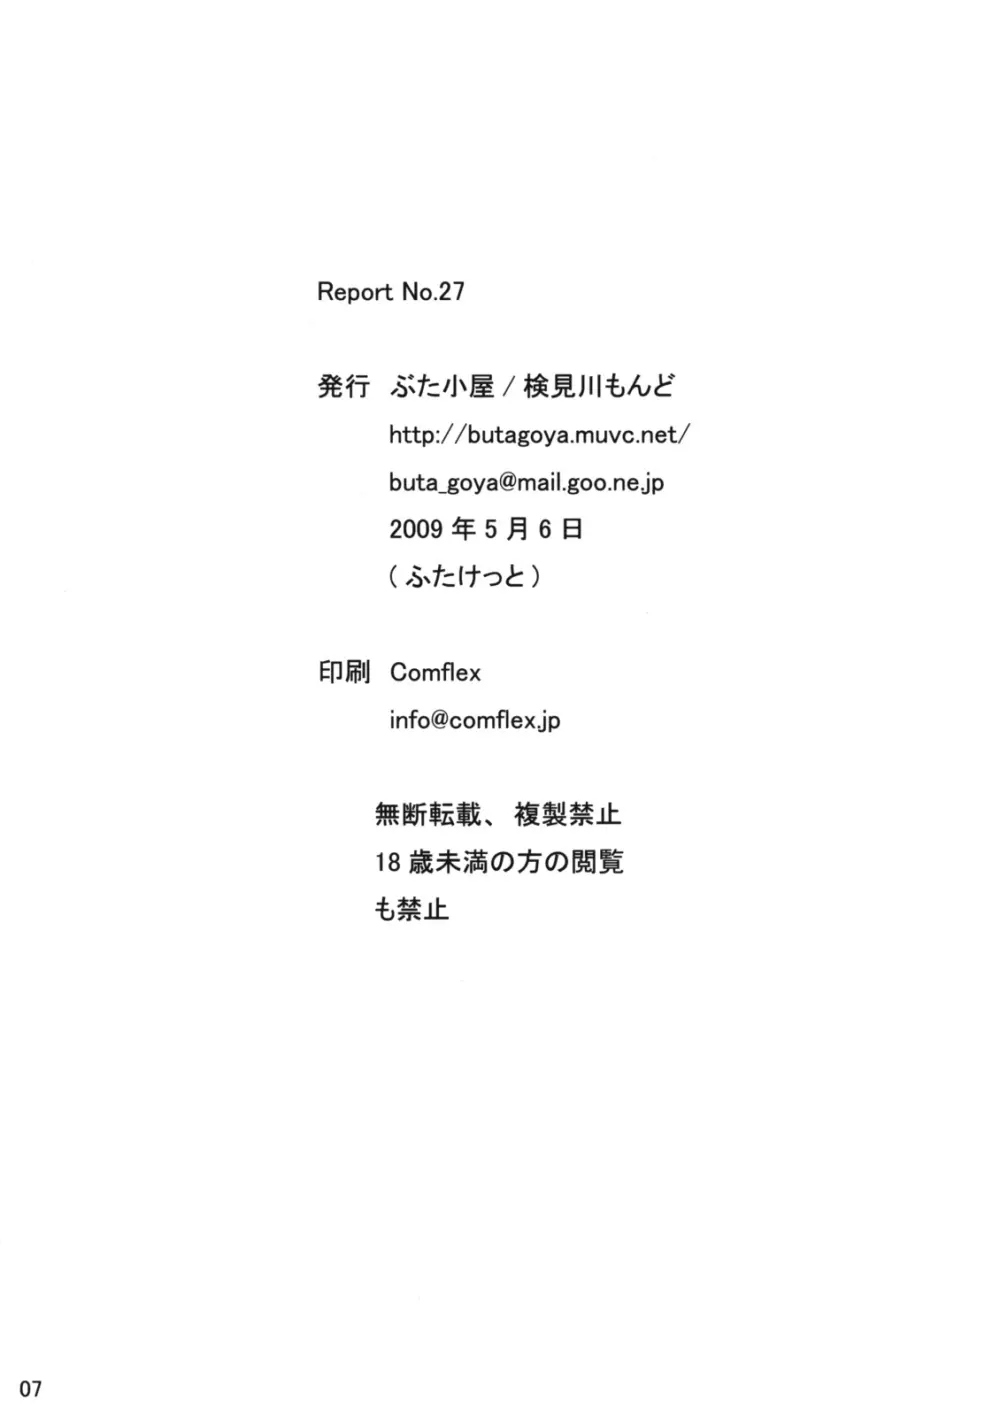 Report No.27 7ページ